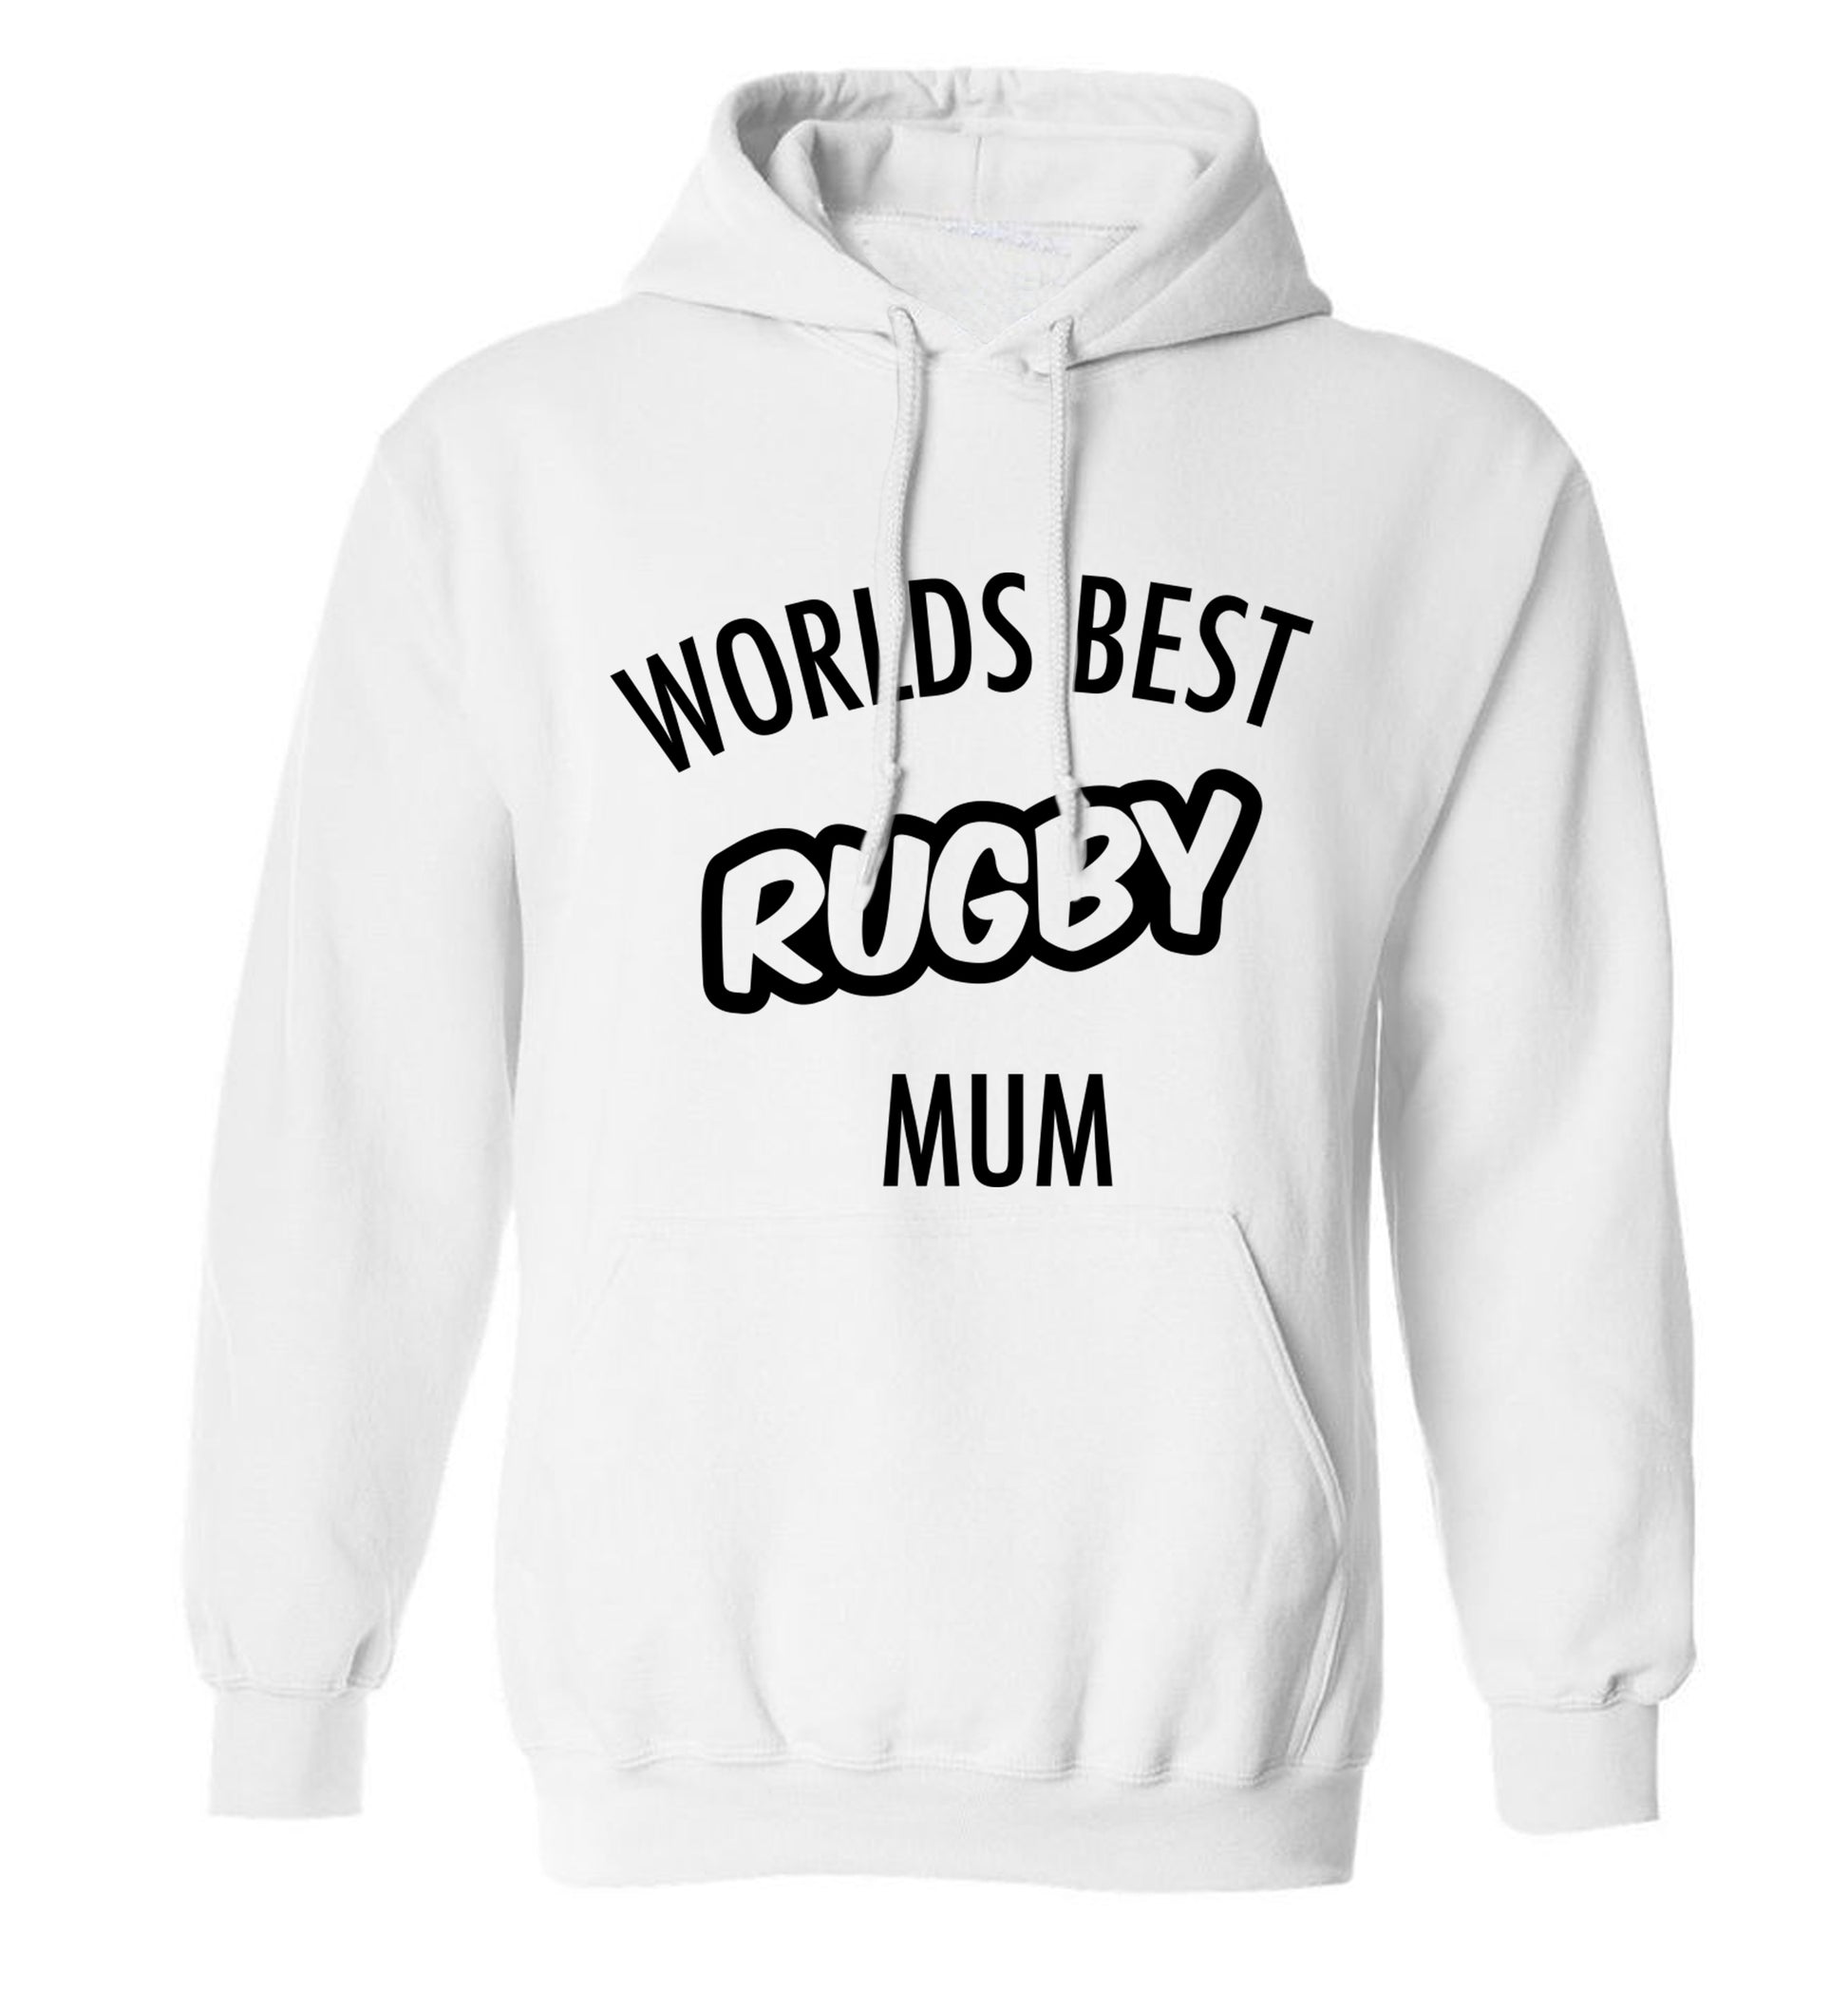 Worlds best rugby mum adults unisex white hoodie 2XL